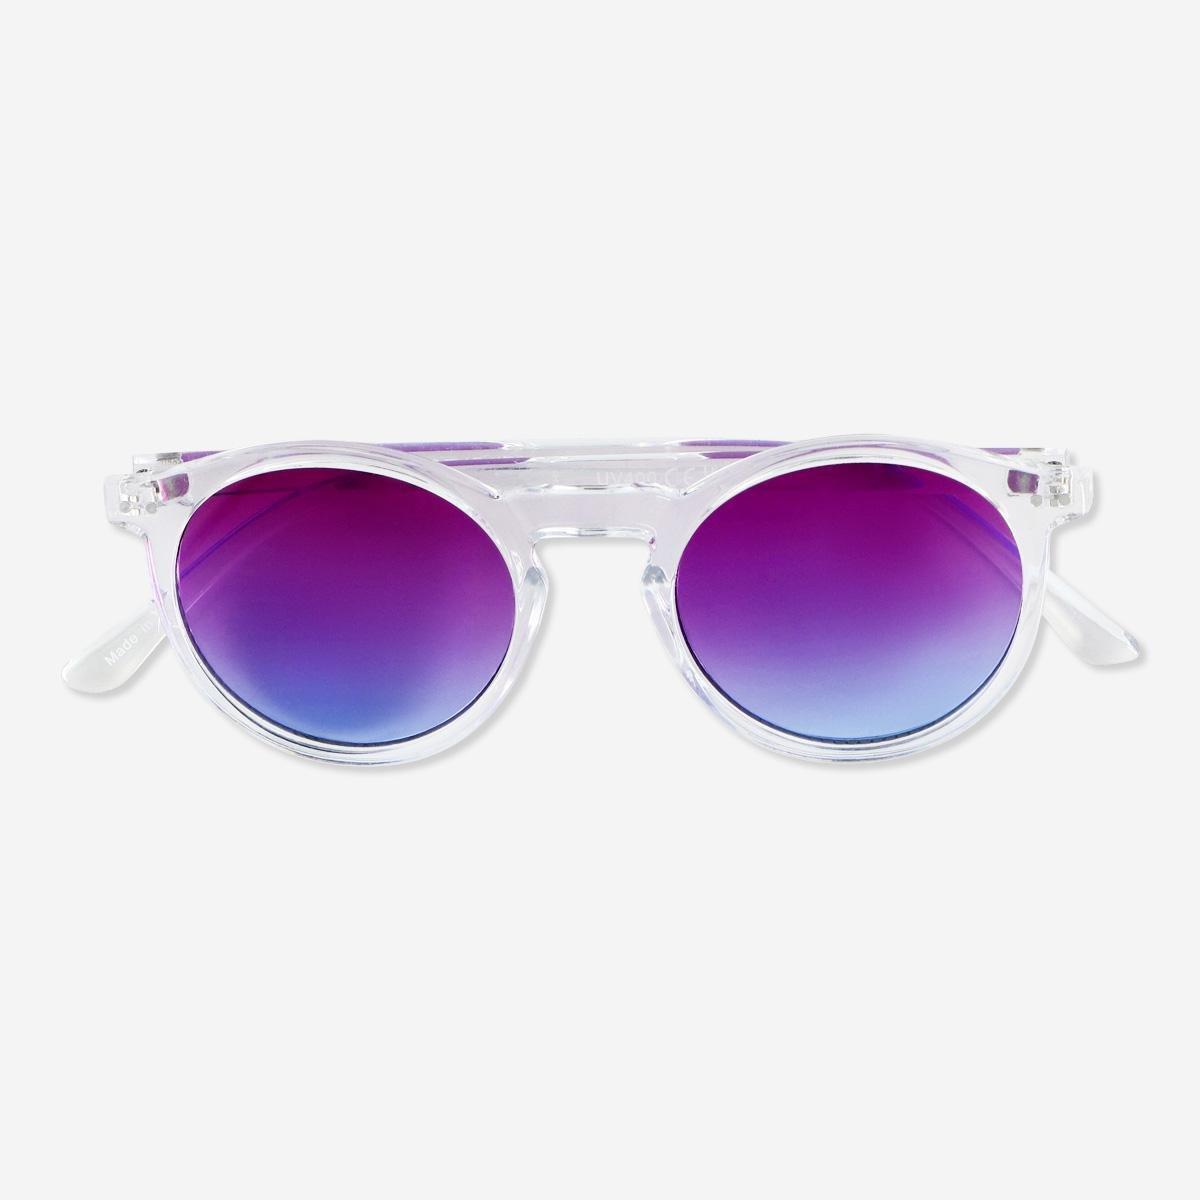 Multicolour round sunglasses